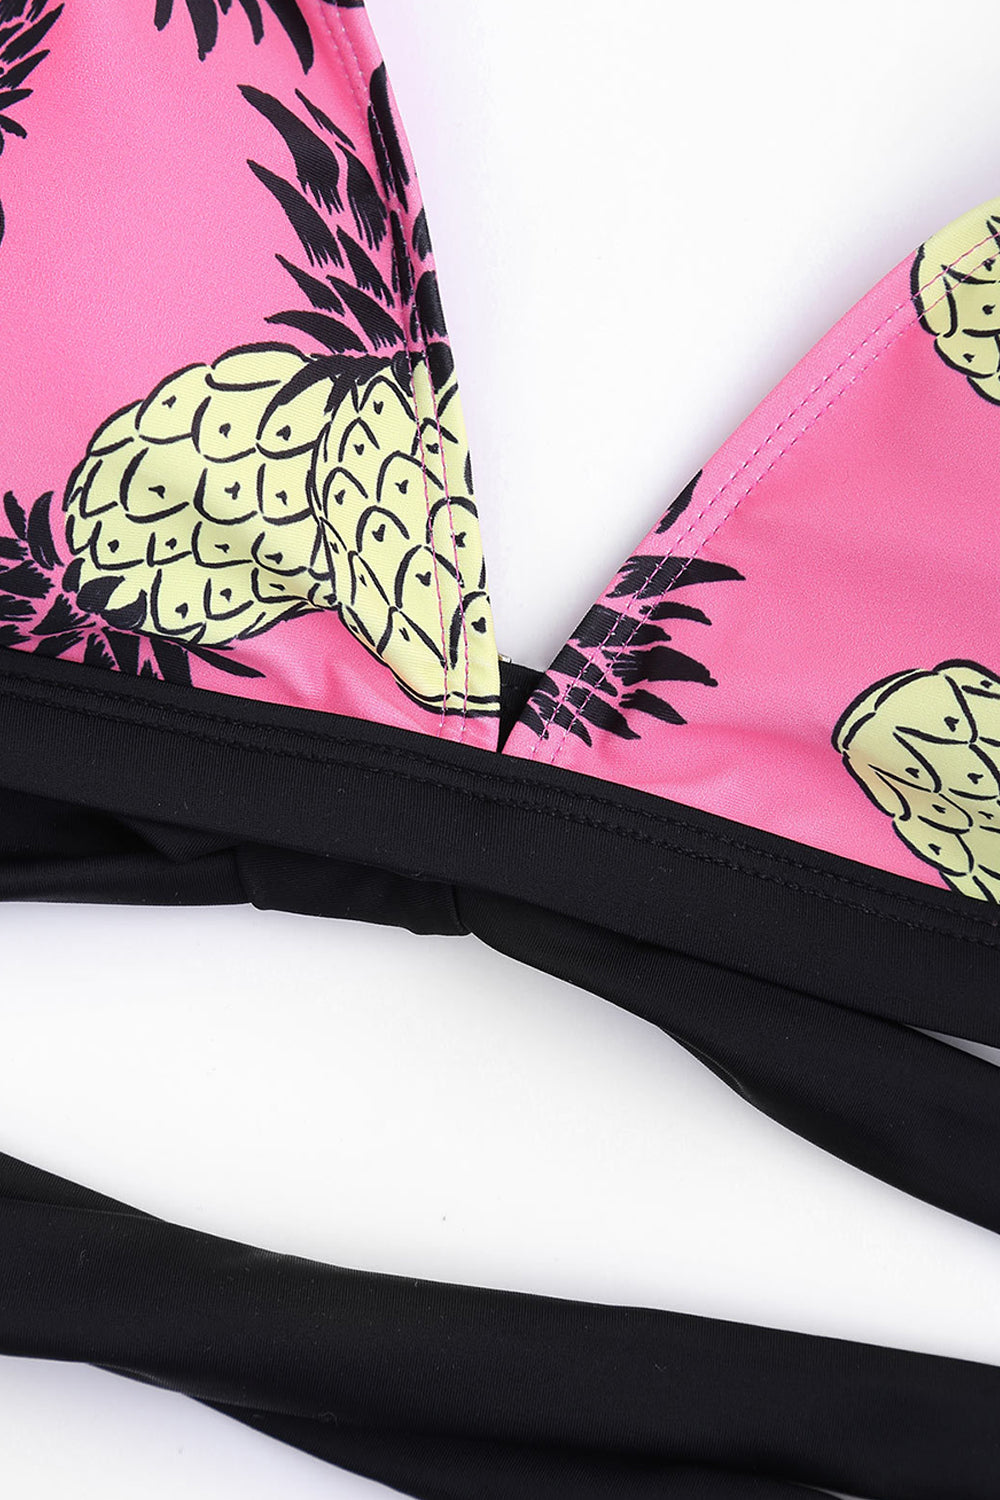 Iyasson Pink Pineapple Printing Cross Design Bikini Sets